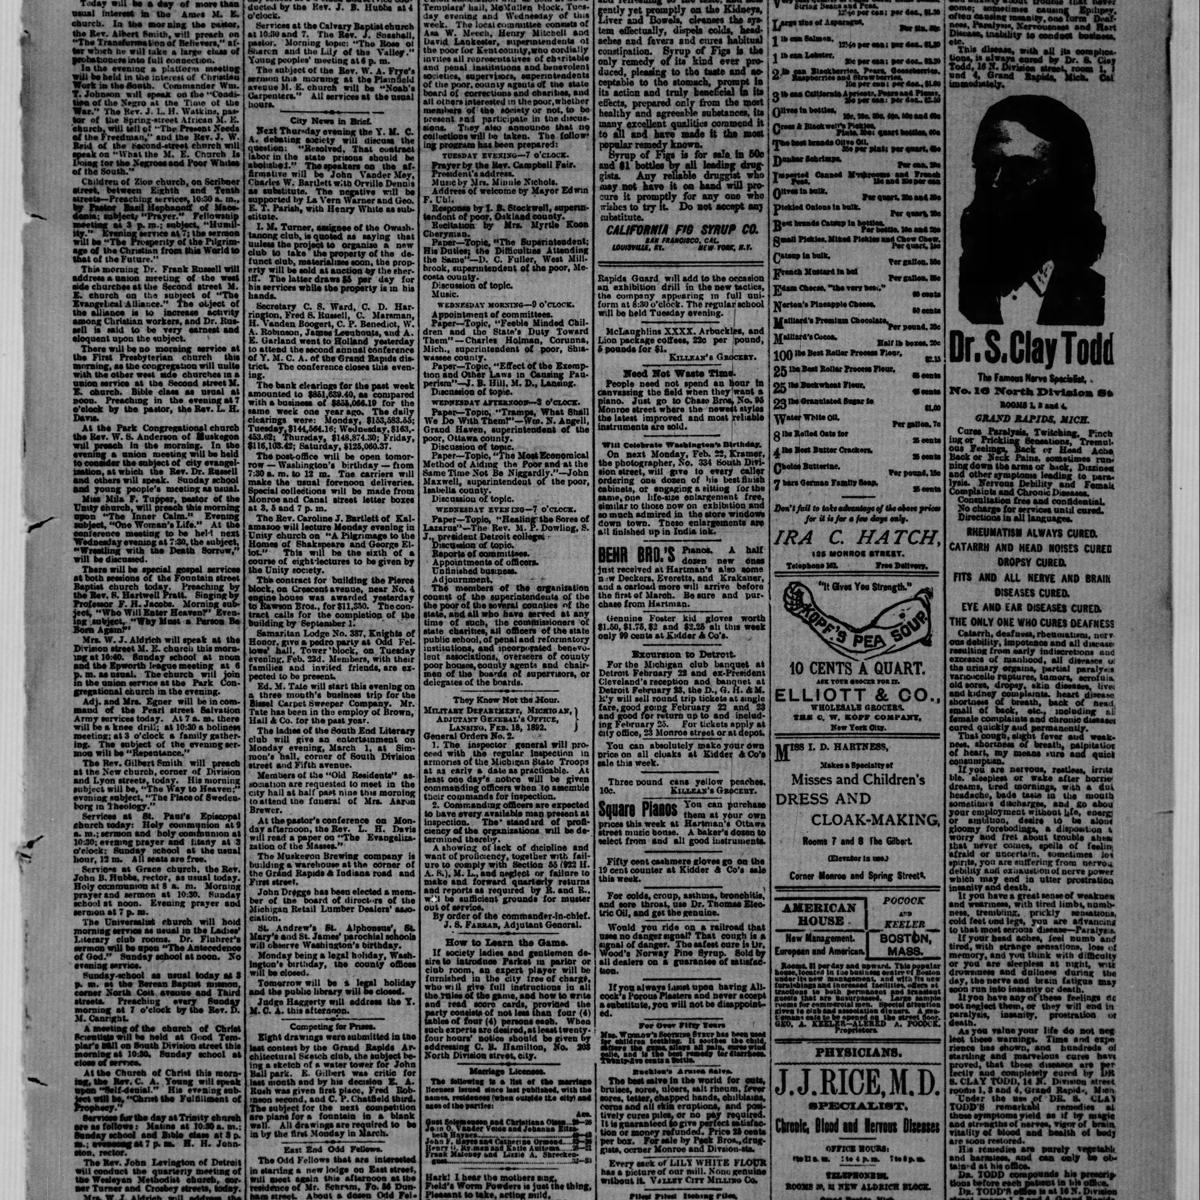 Grand Rapids Herald, 1892-02-21, page 7